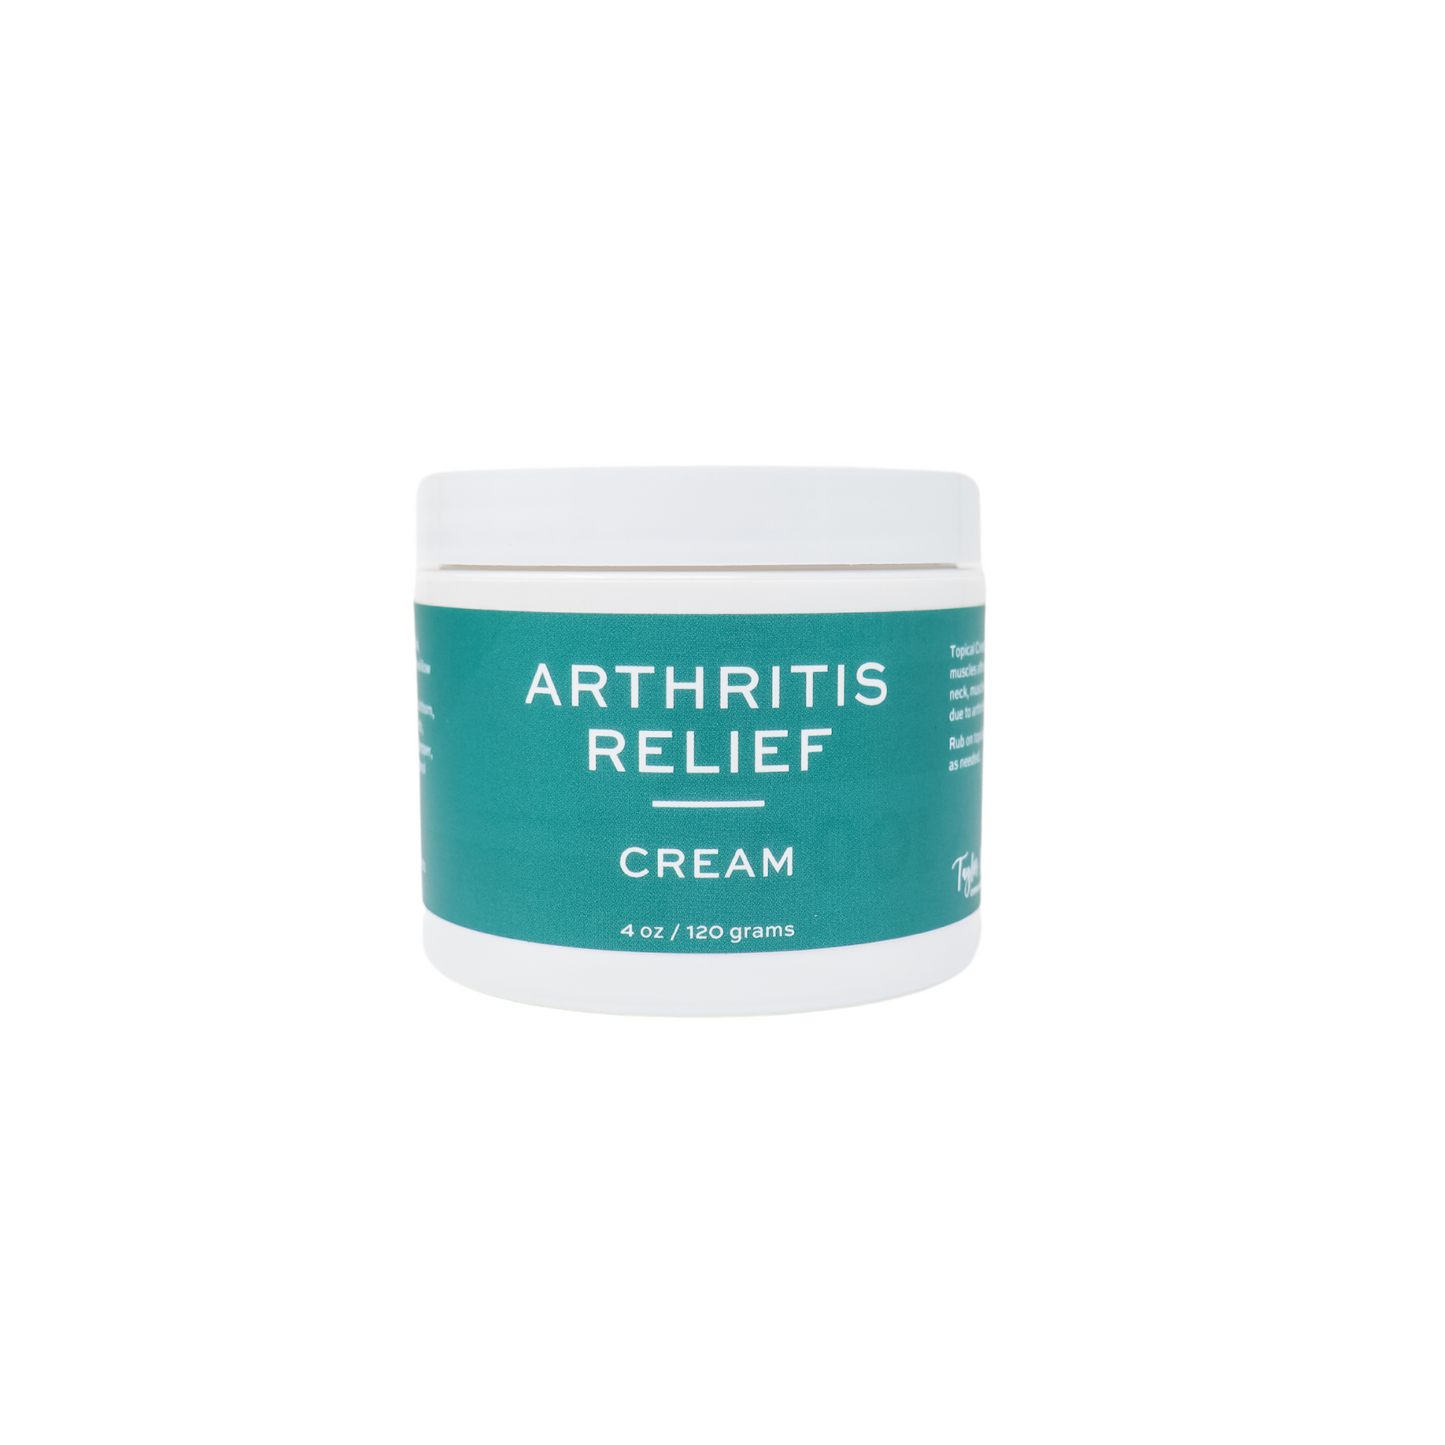 arthtritis relief cream | taylor made organics